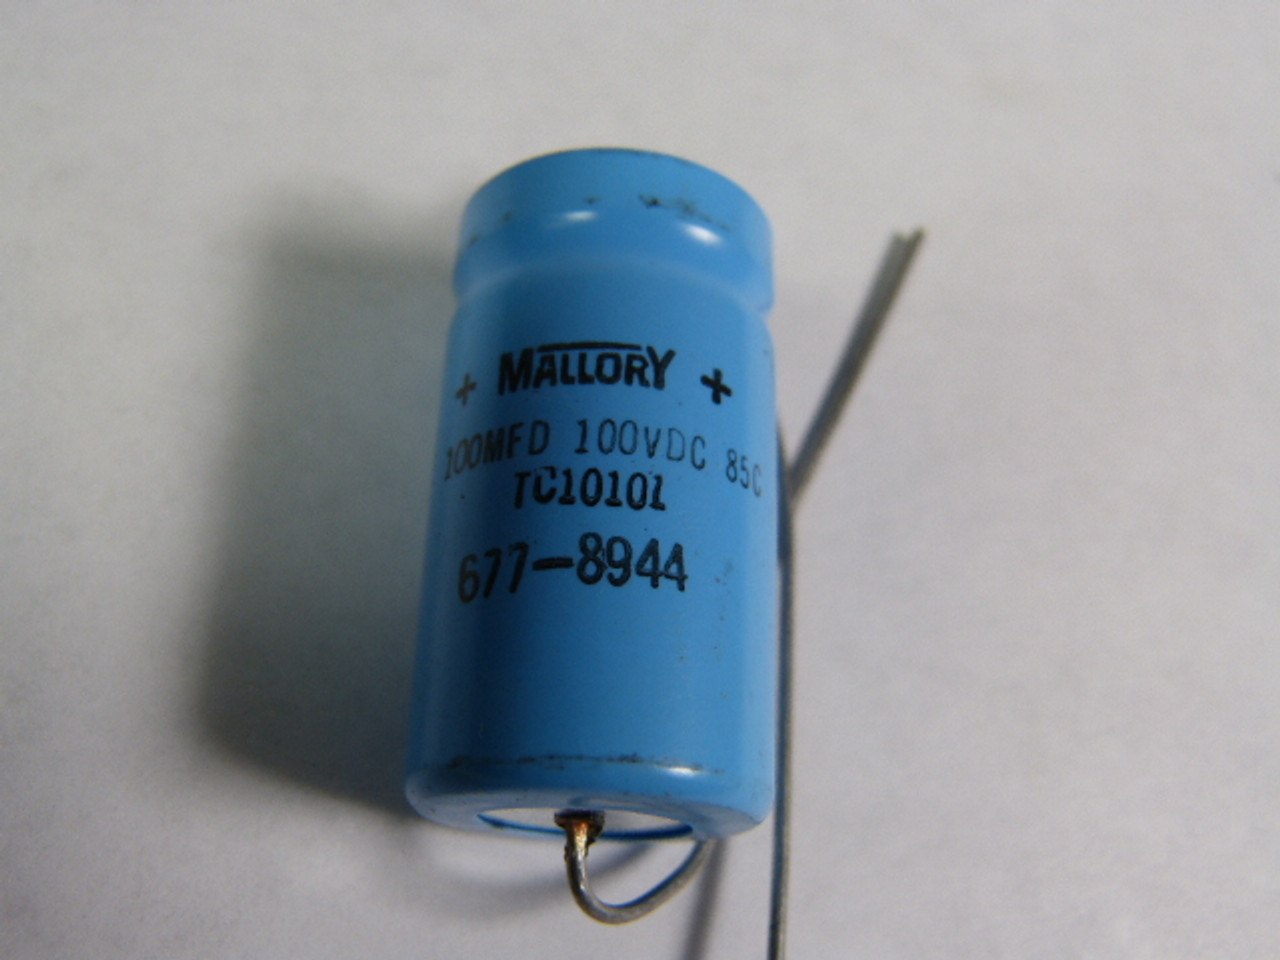 Mallory TC10101/677-8944 Capacitor 100mfd 100VDC USED